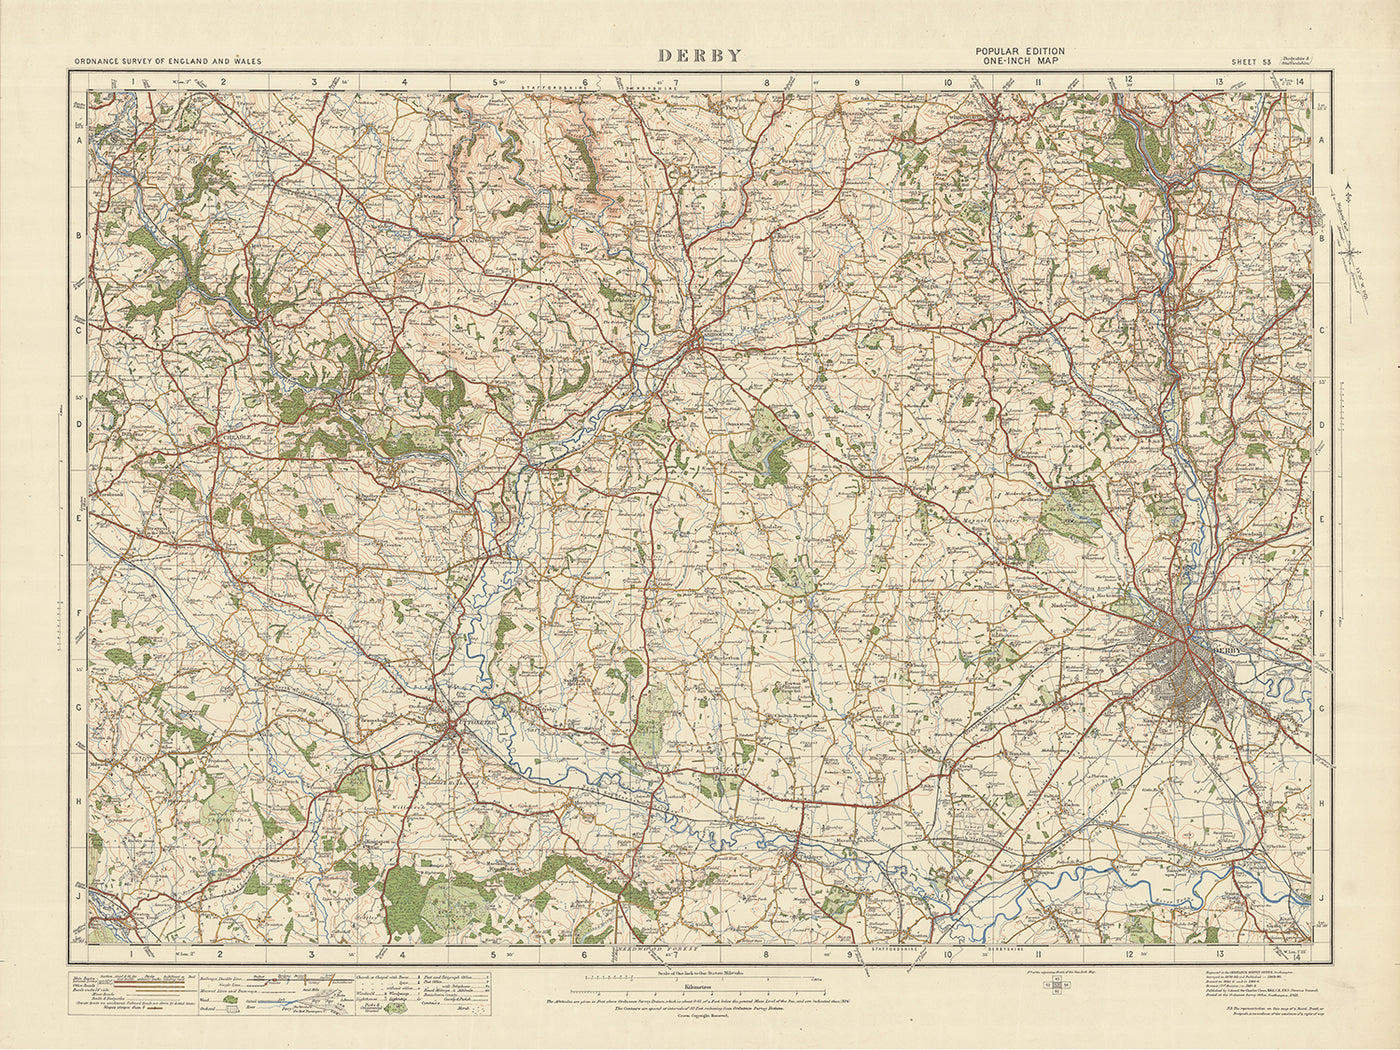 Mapa de Old Ordnance Survey, hoja 53 - Derby, 1925: Uttoxeter, Belper, Ripley, Ashbourne, Cheadle